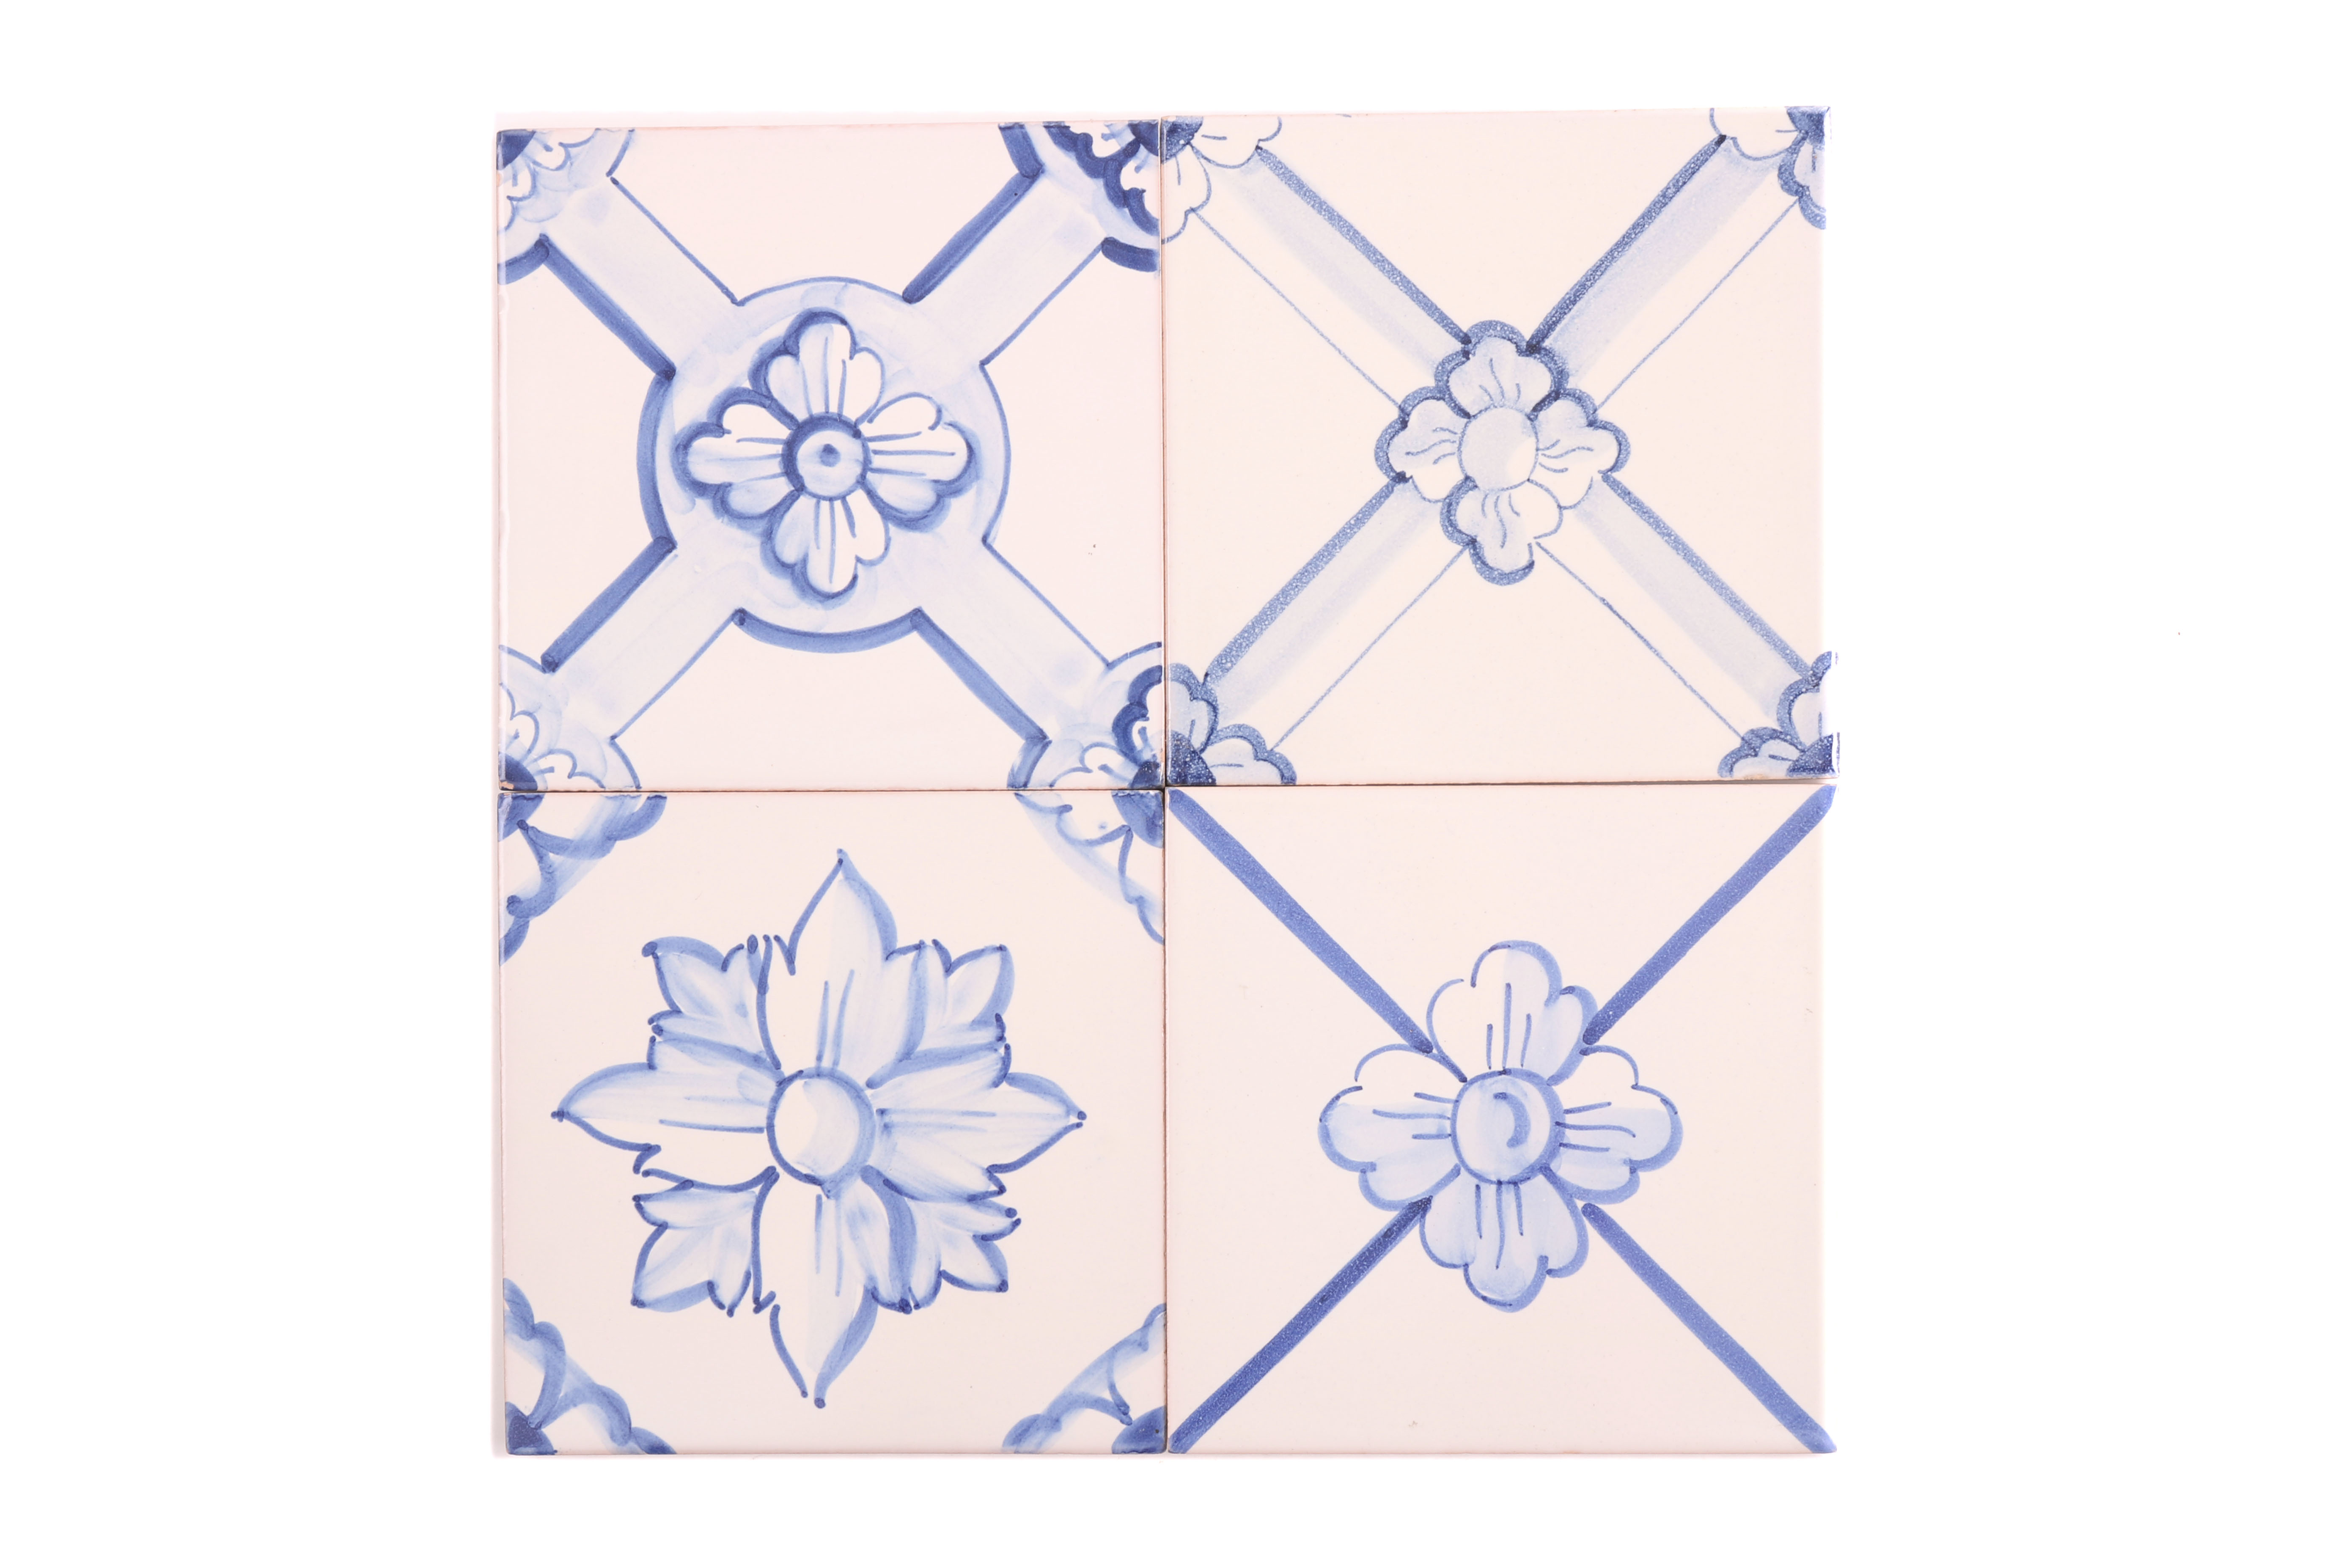 Quatro azulejos avulsos da Fábrica Viúva Lamego